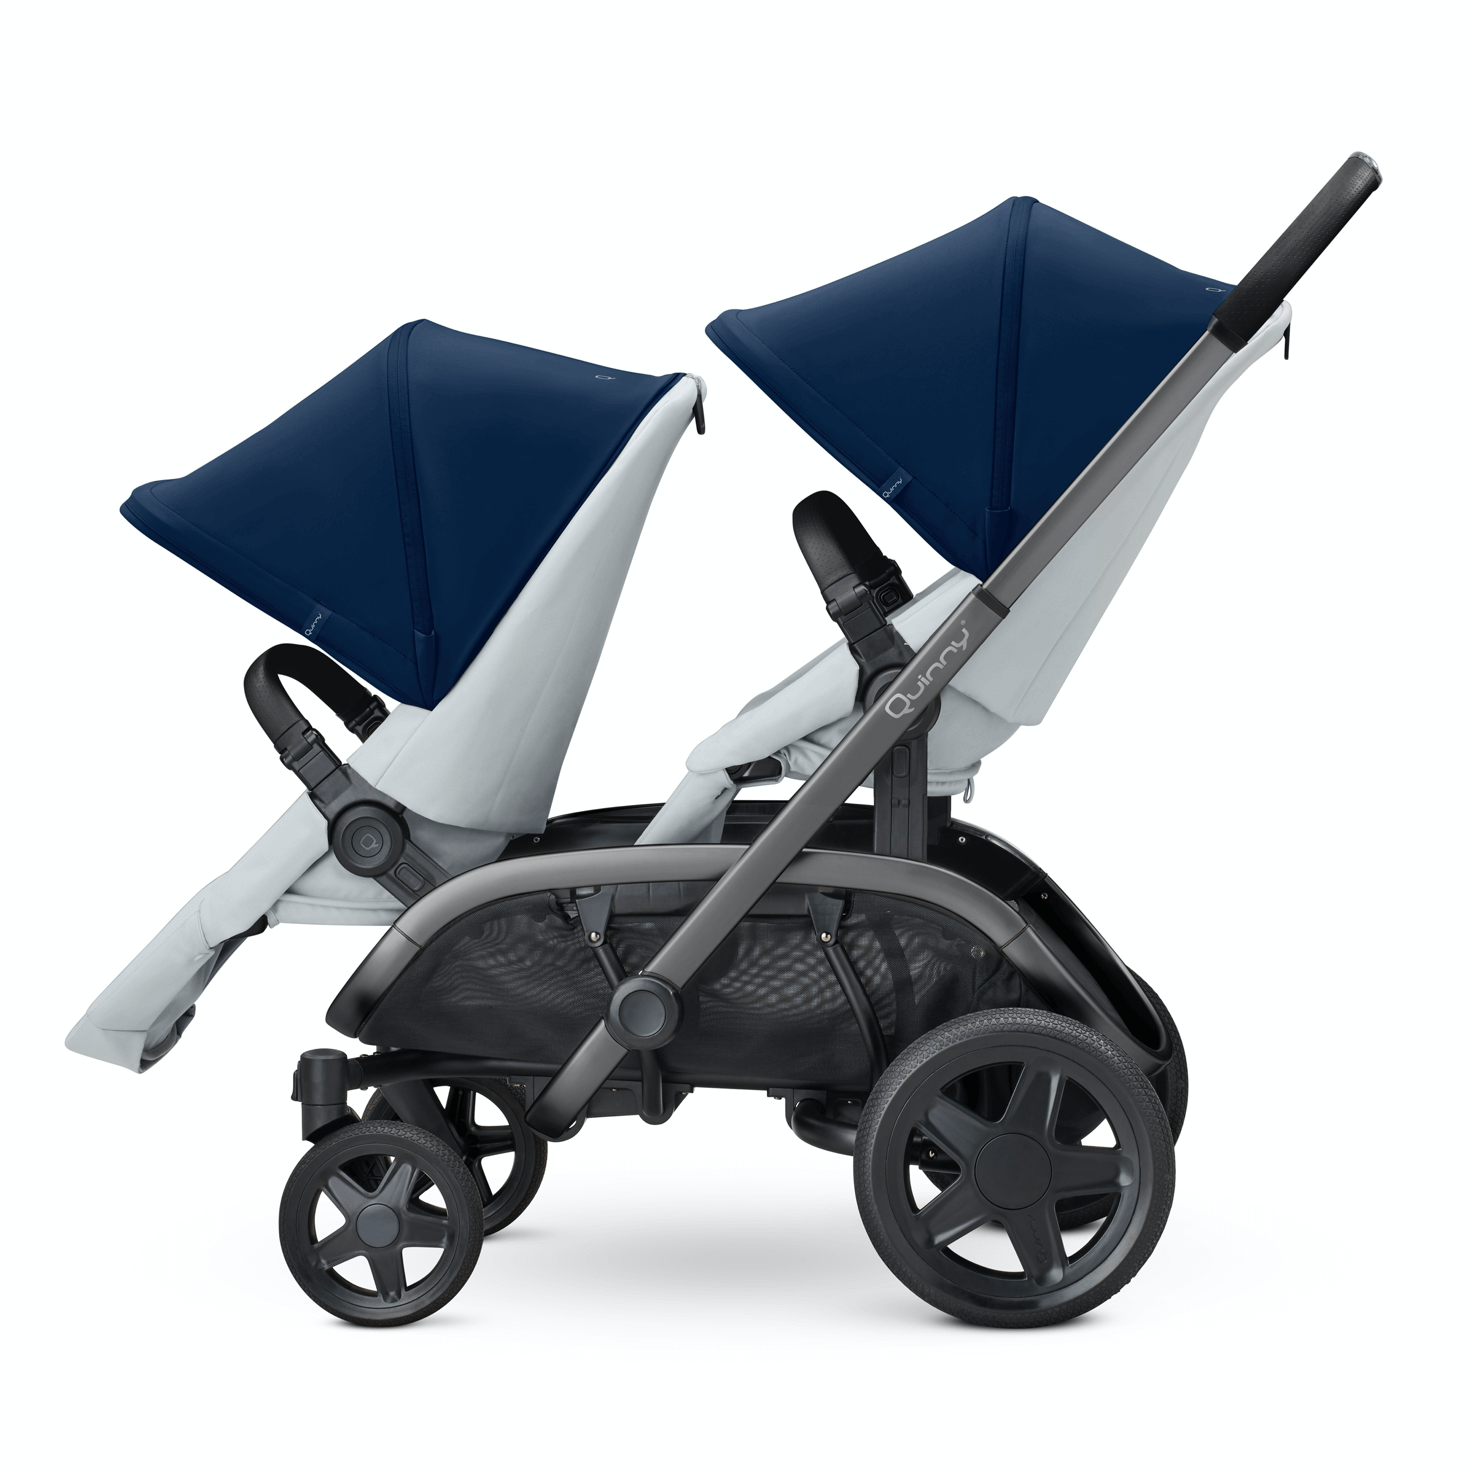 Design of blue Quinny stroller facing forward